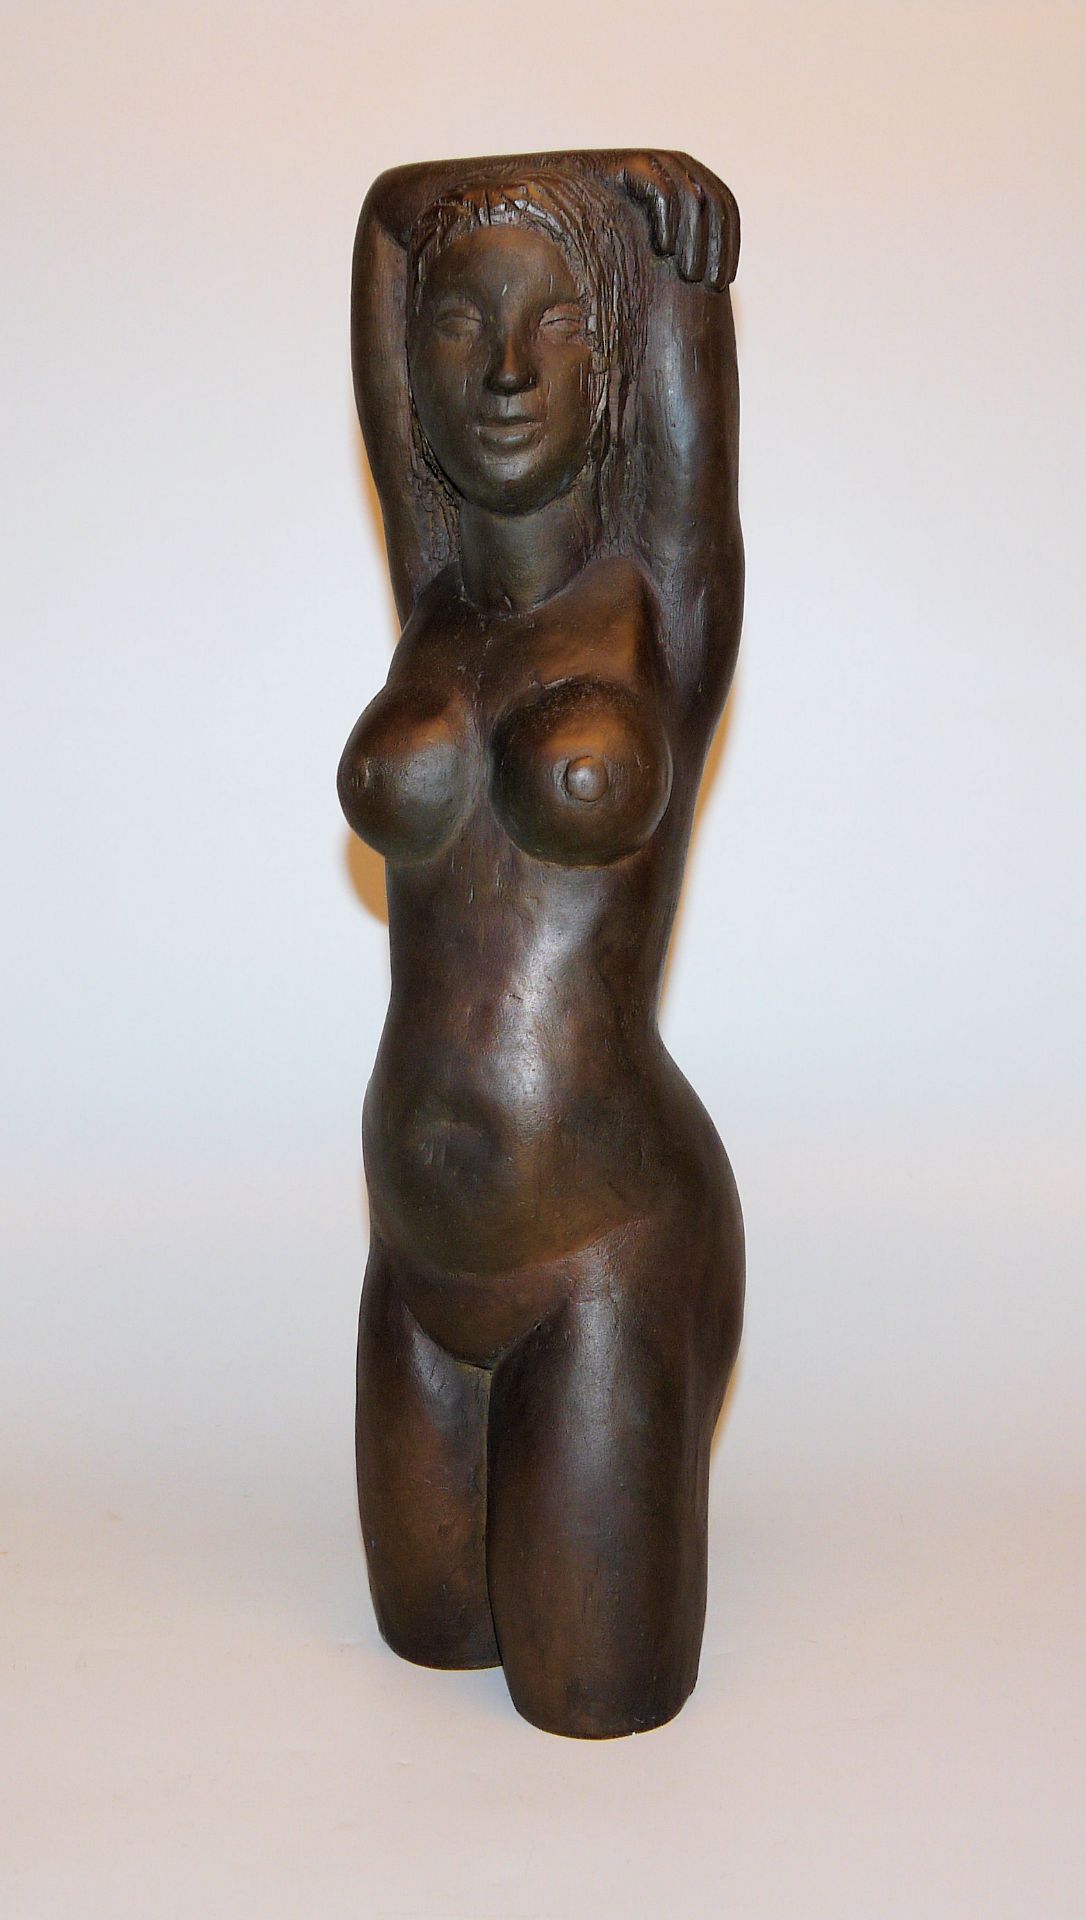 Uwe Wenk-Wolff, "Mädchentorso", bronze sculpture from 1975, with catalogue raisonné, no. 72074